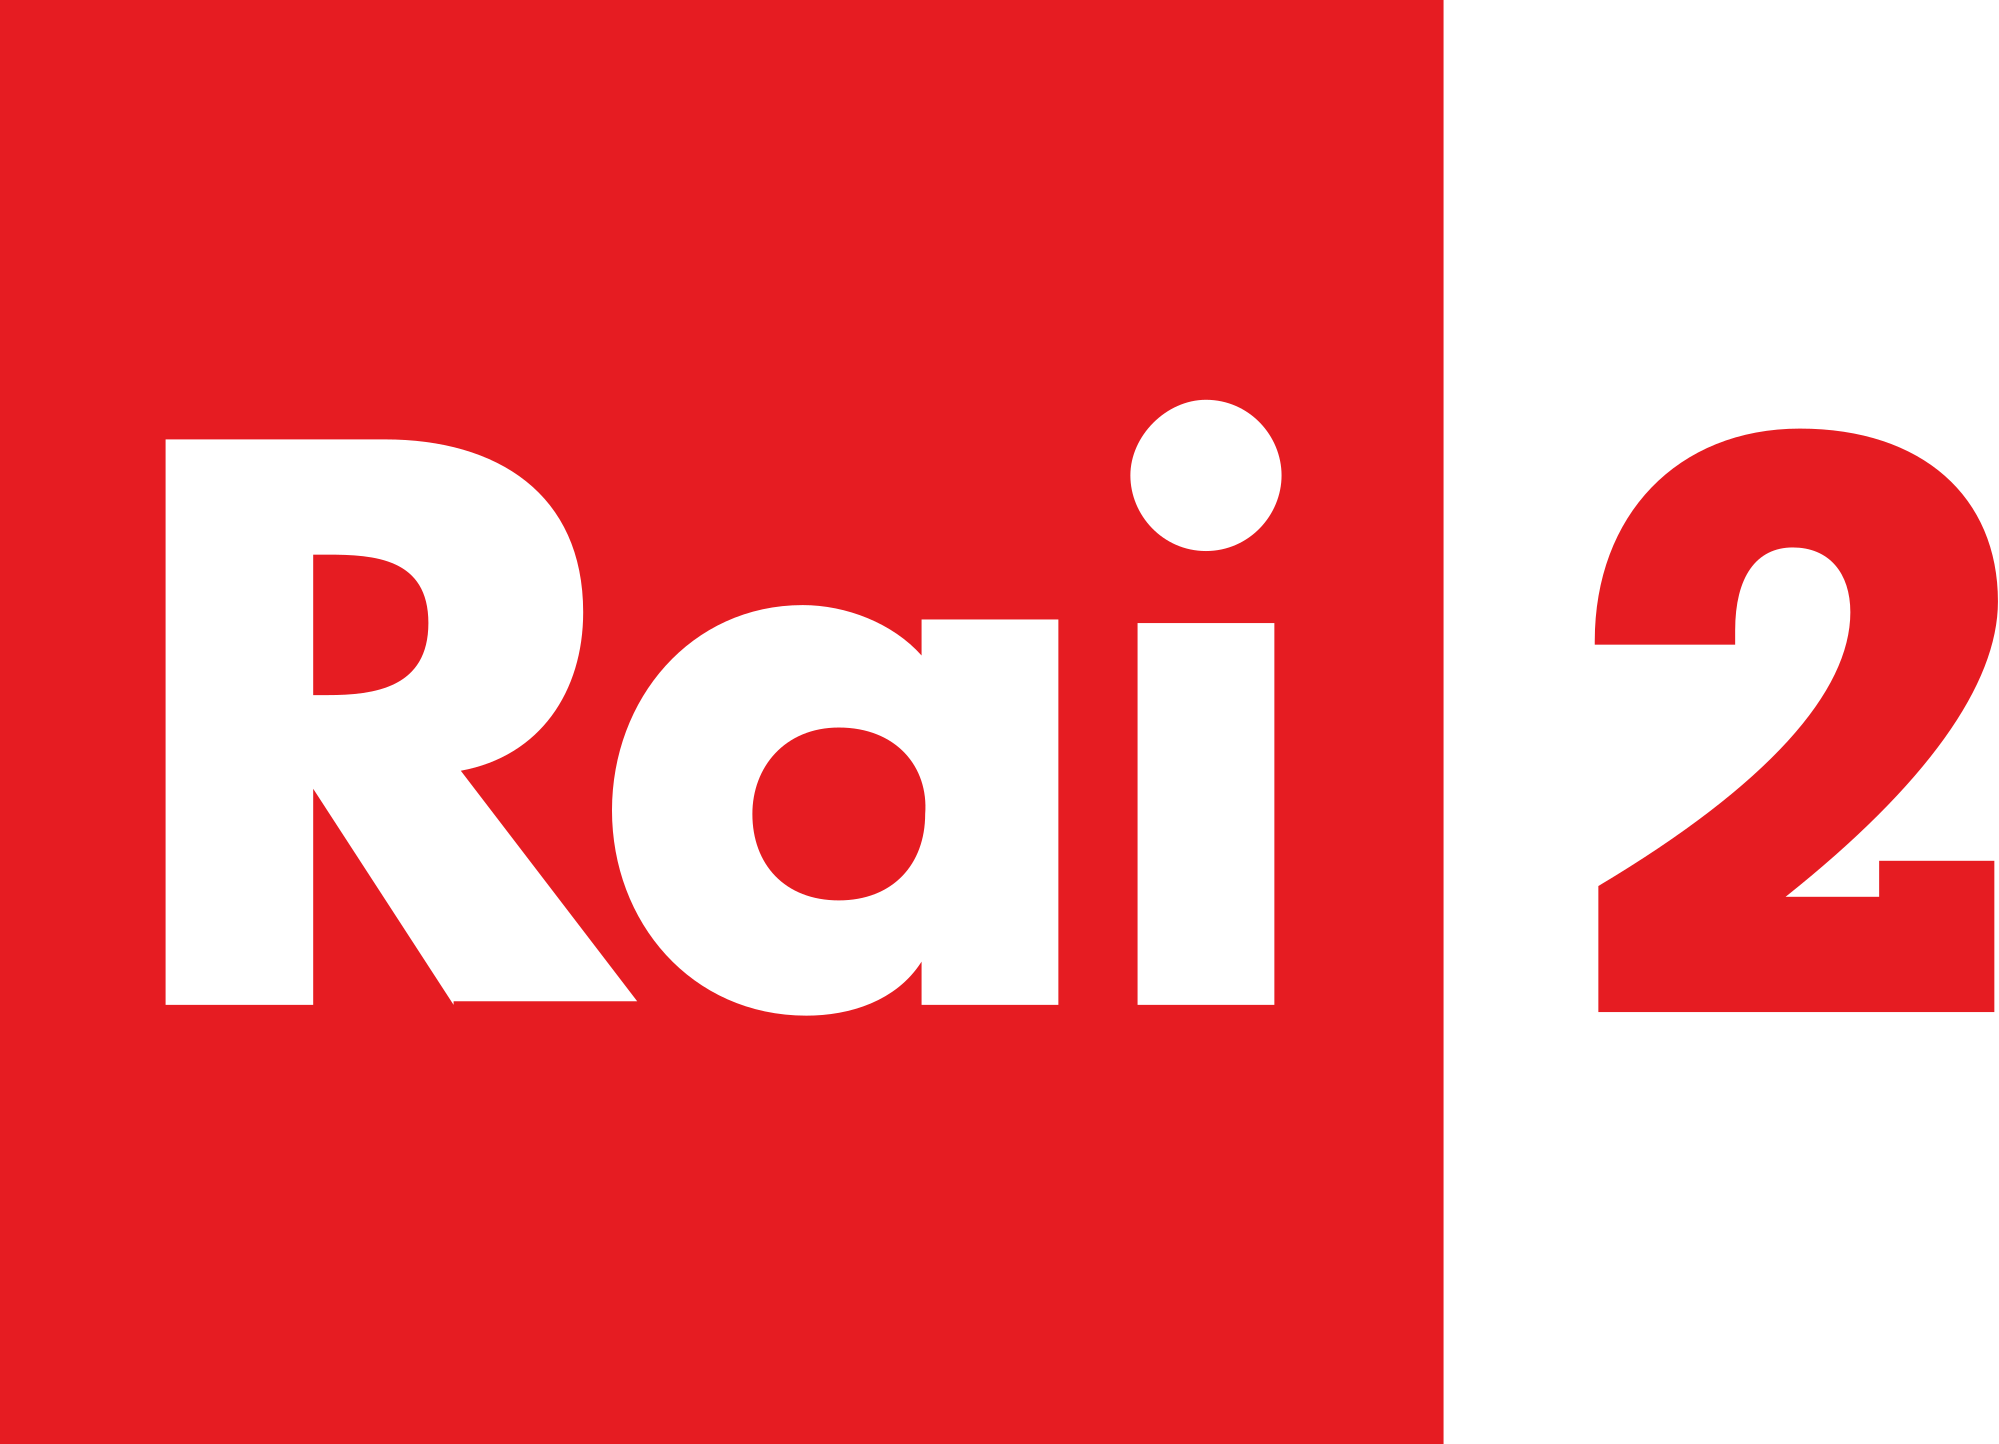 Rai 2 - network